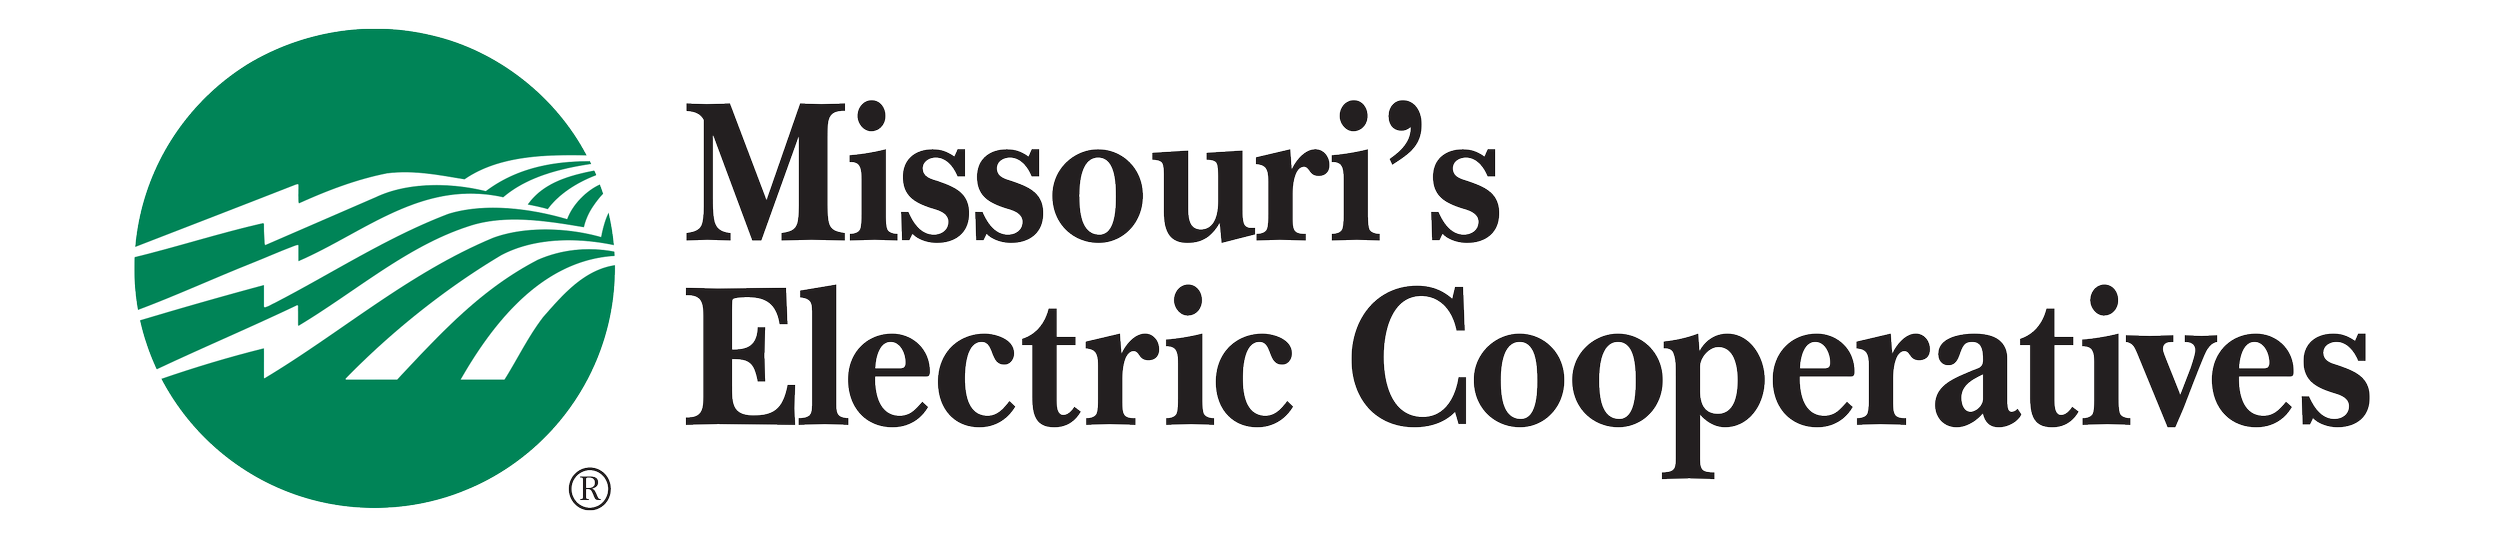 Missouri's Electric Cooperatives